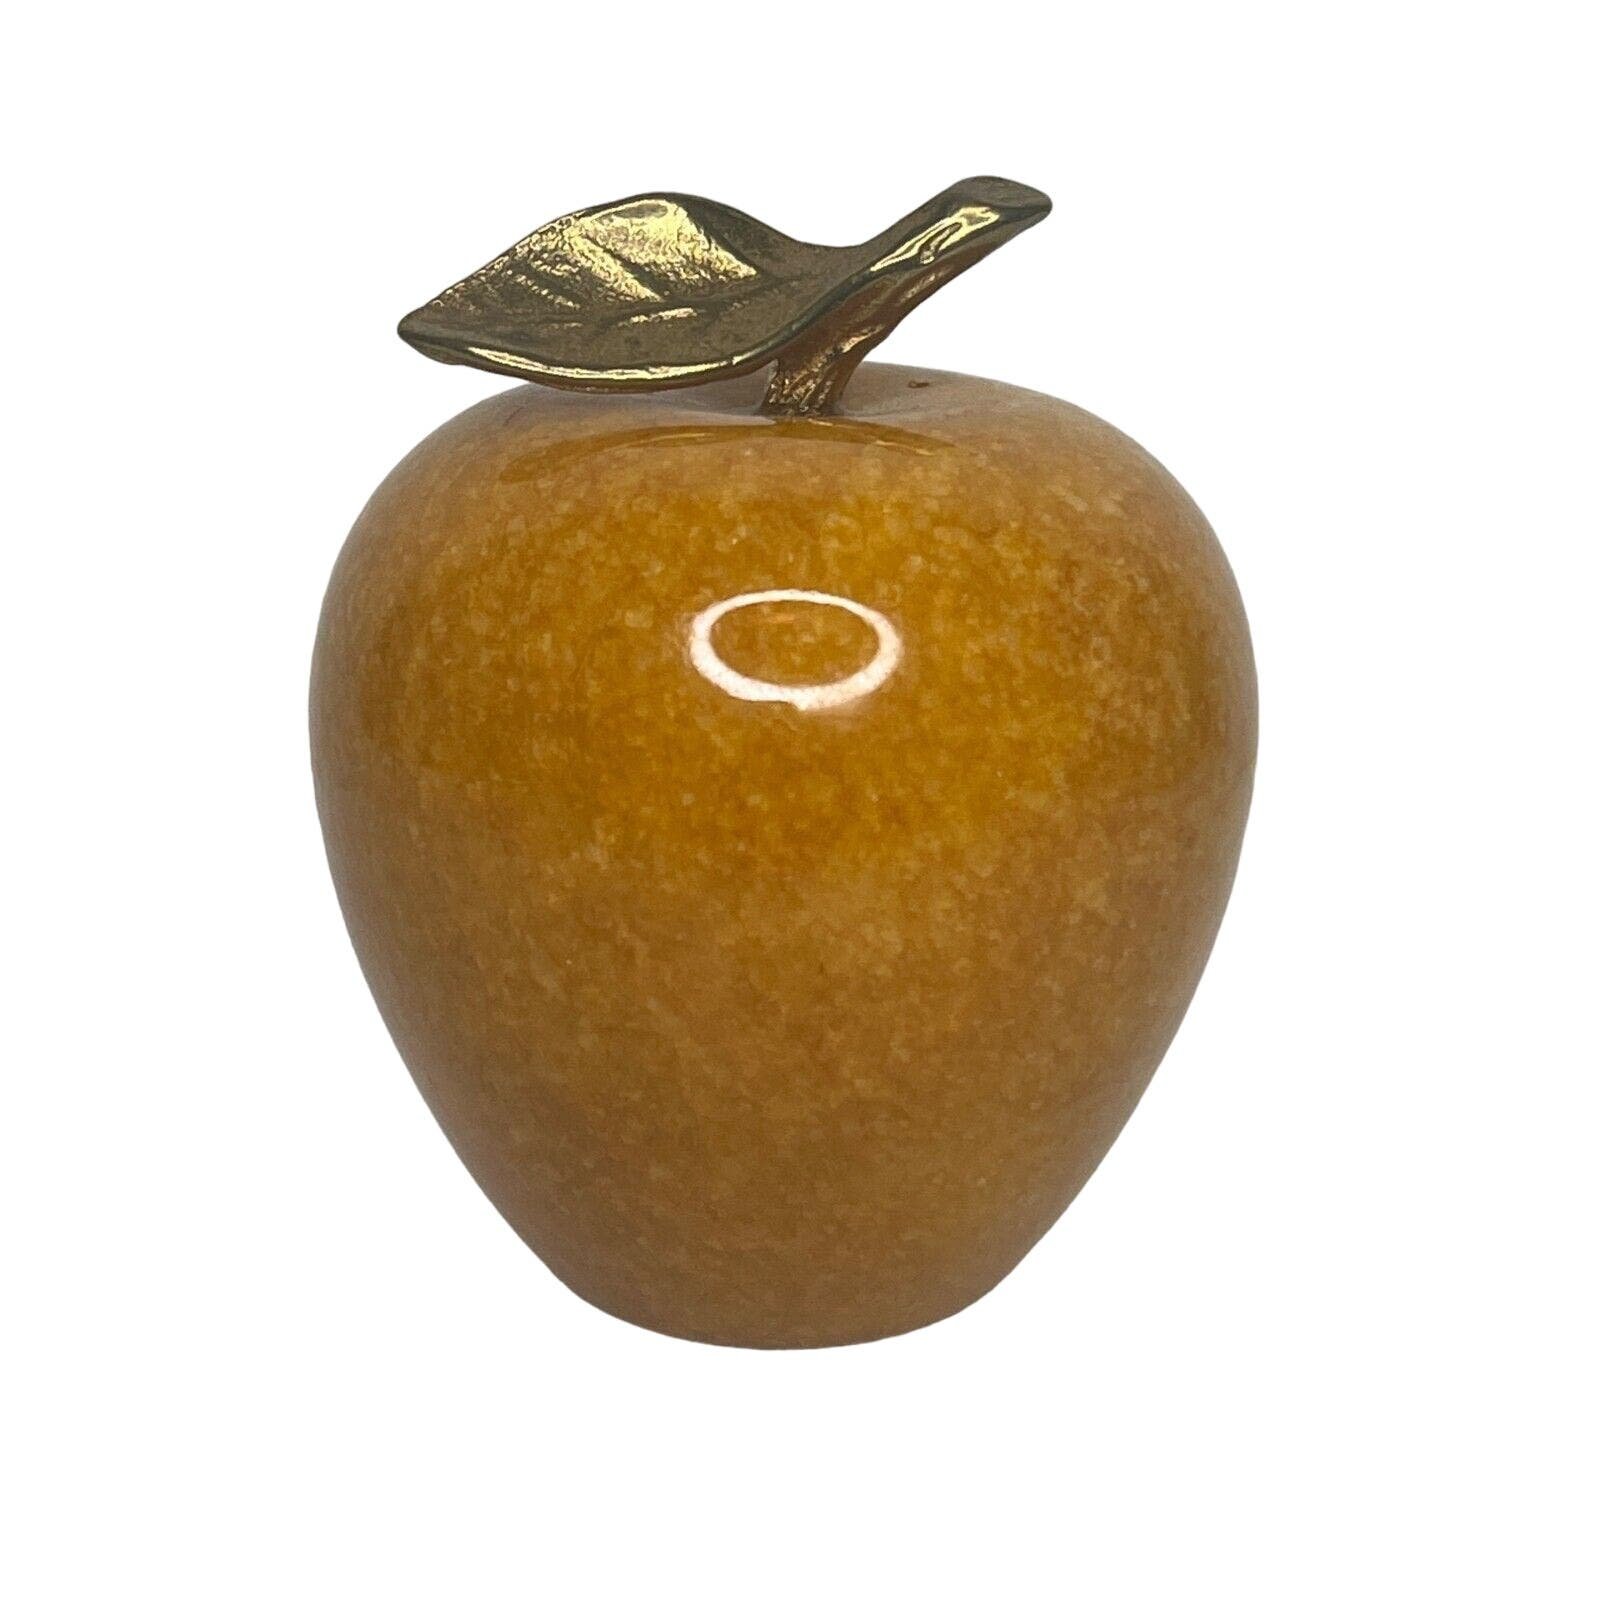 Vintage Apple Paperweight Yellow Onyx Marble Brass Stem Gift Teacher lCGg8Aq5C